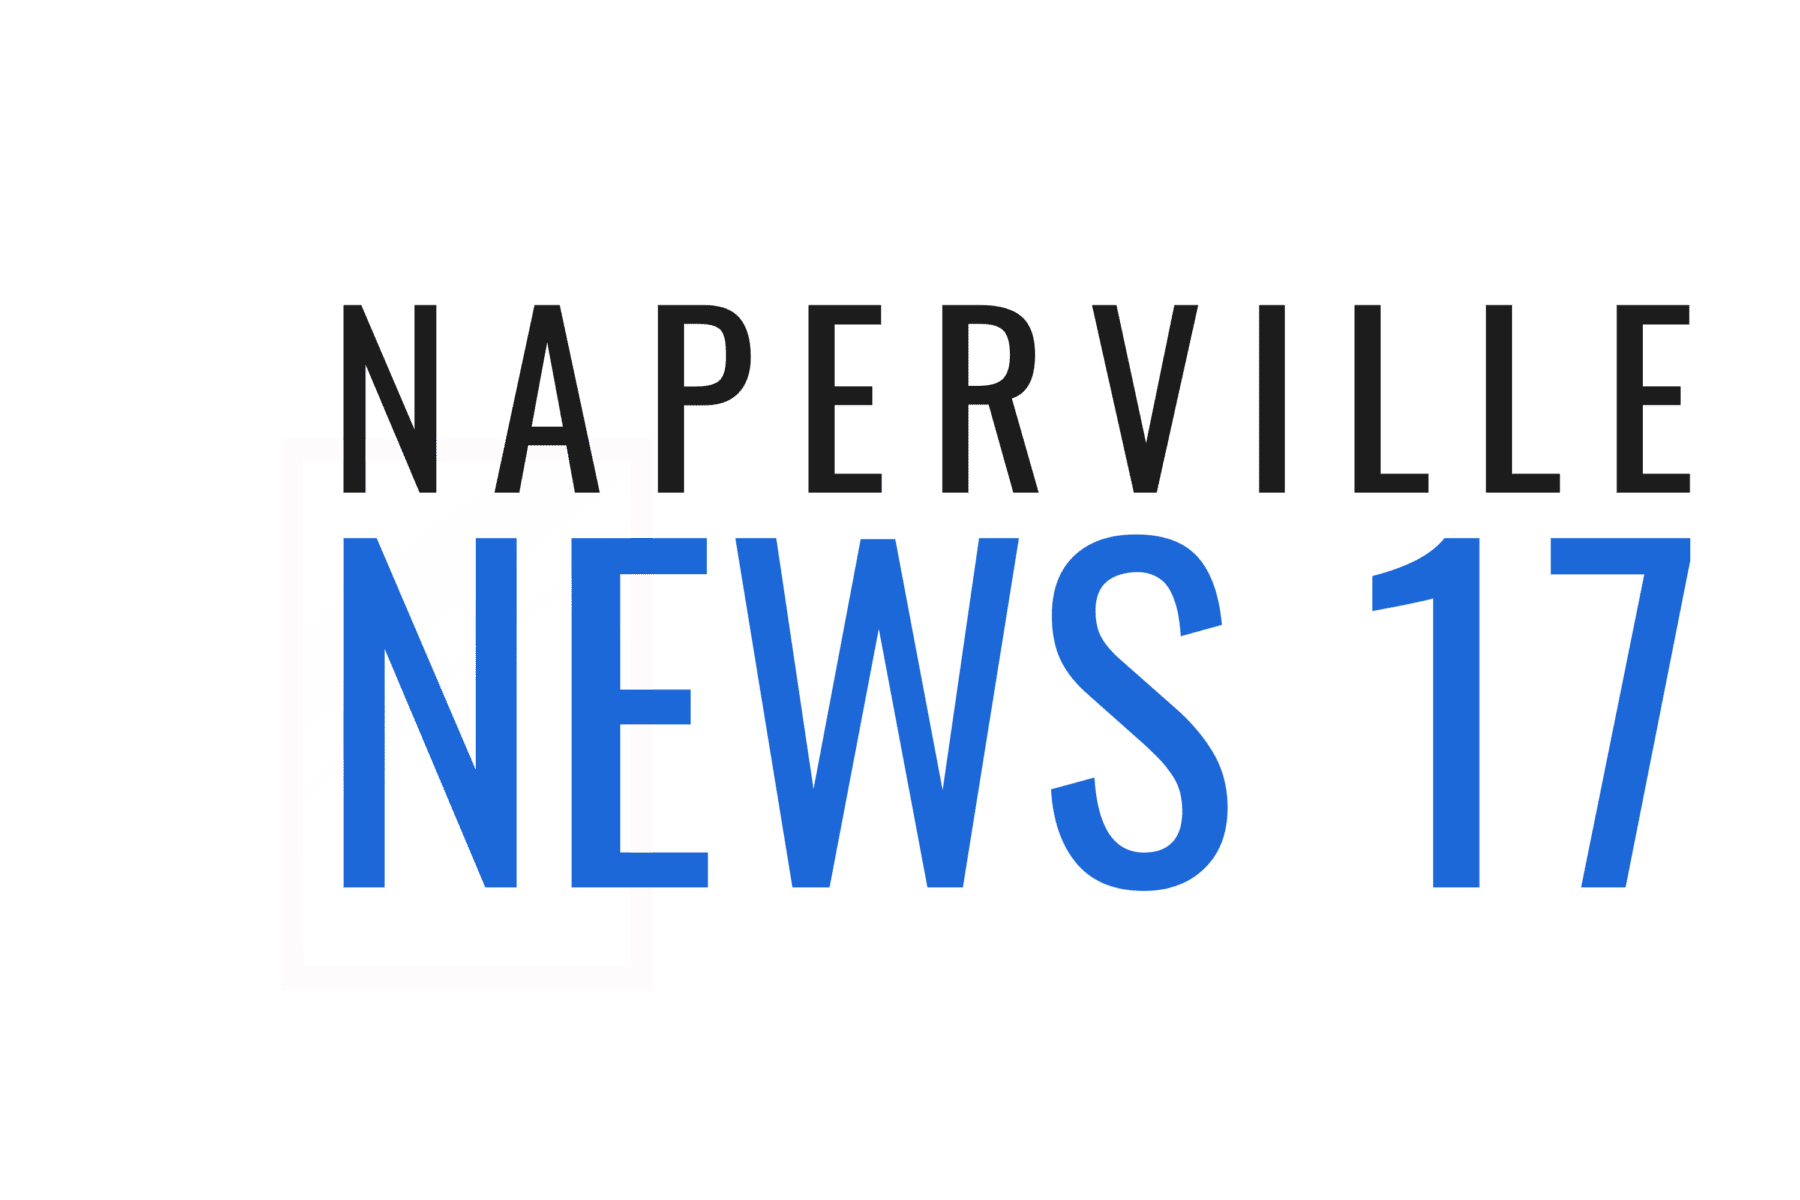 Naperville News 17 image